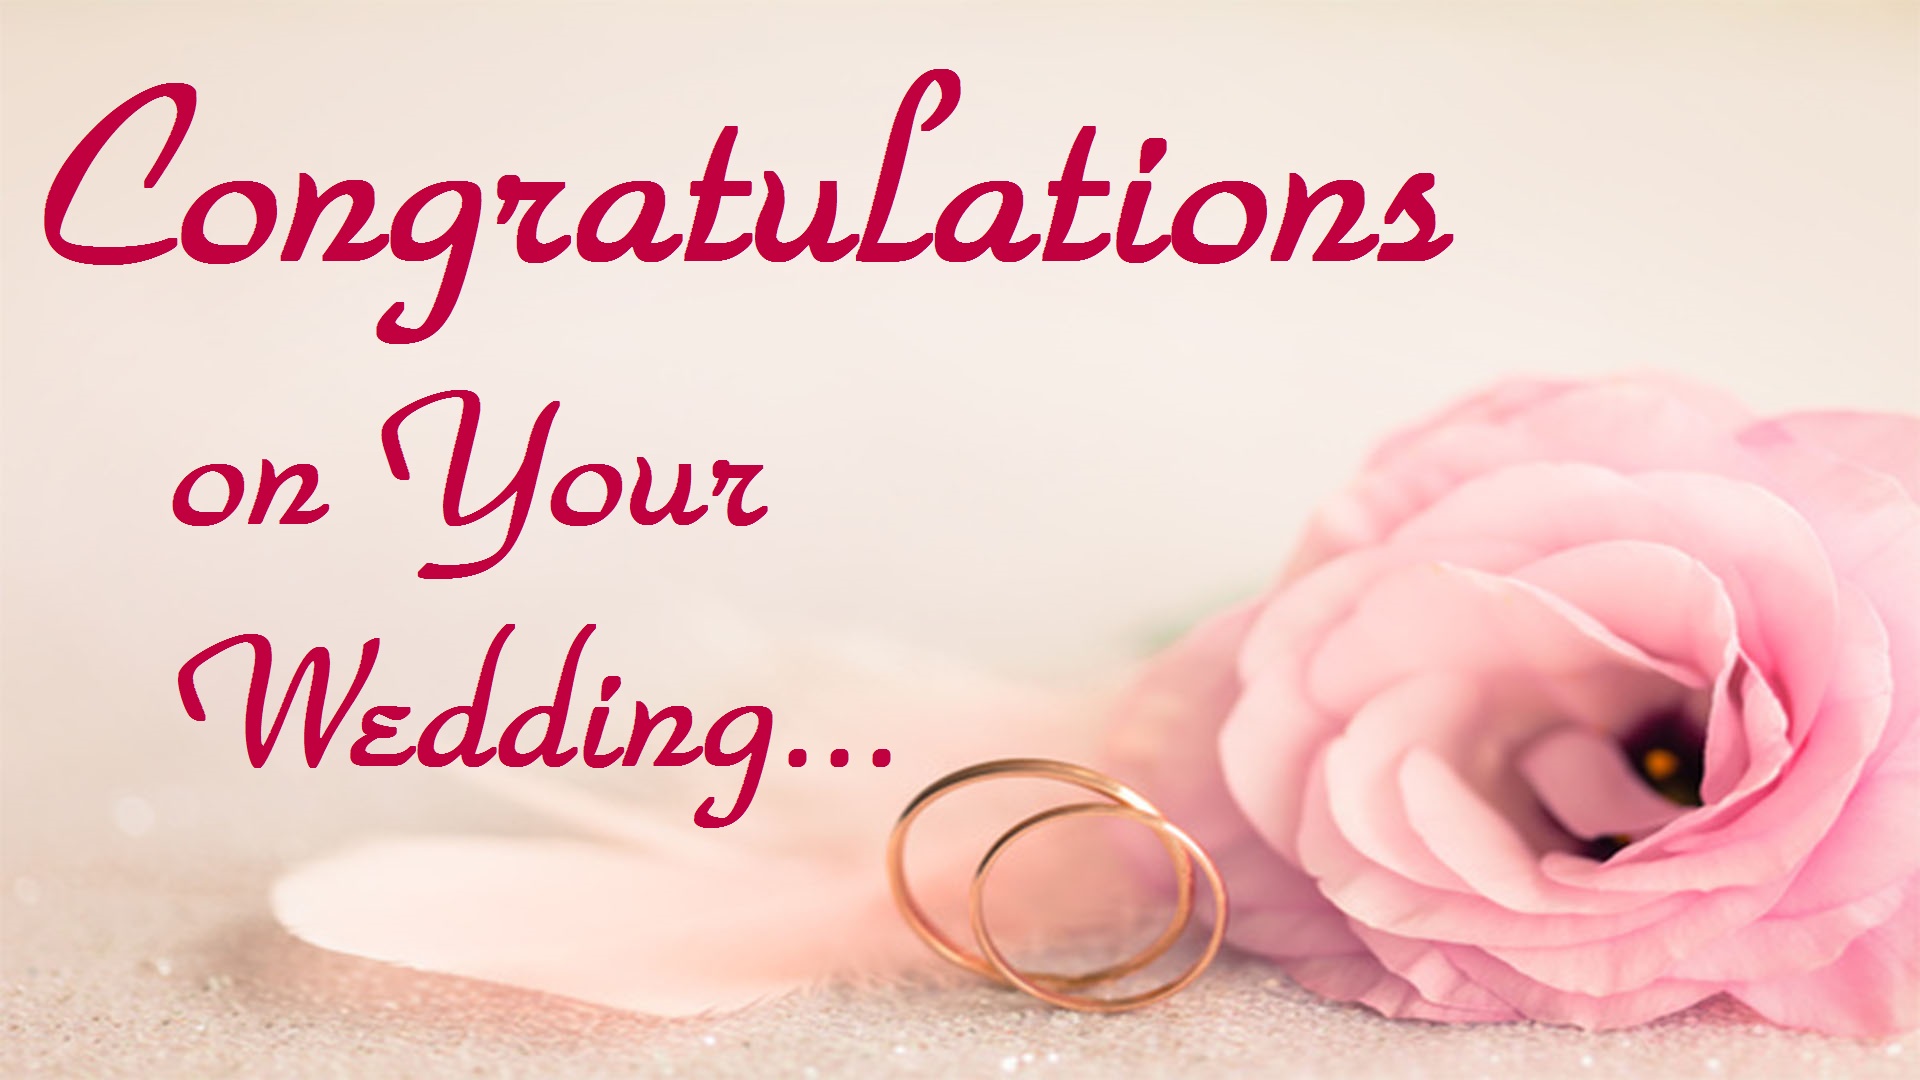 wedding congratulations hd image